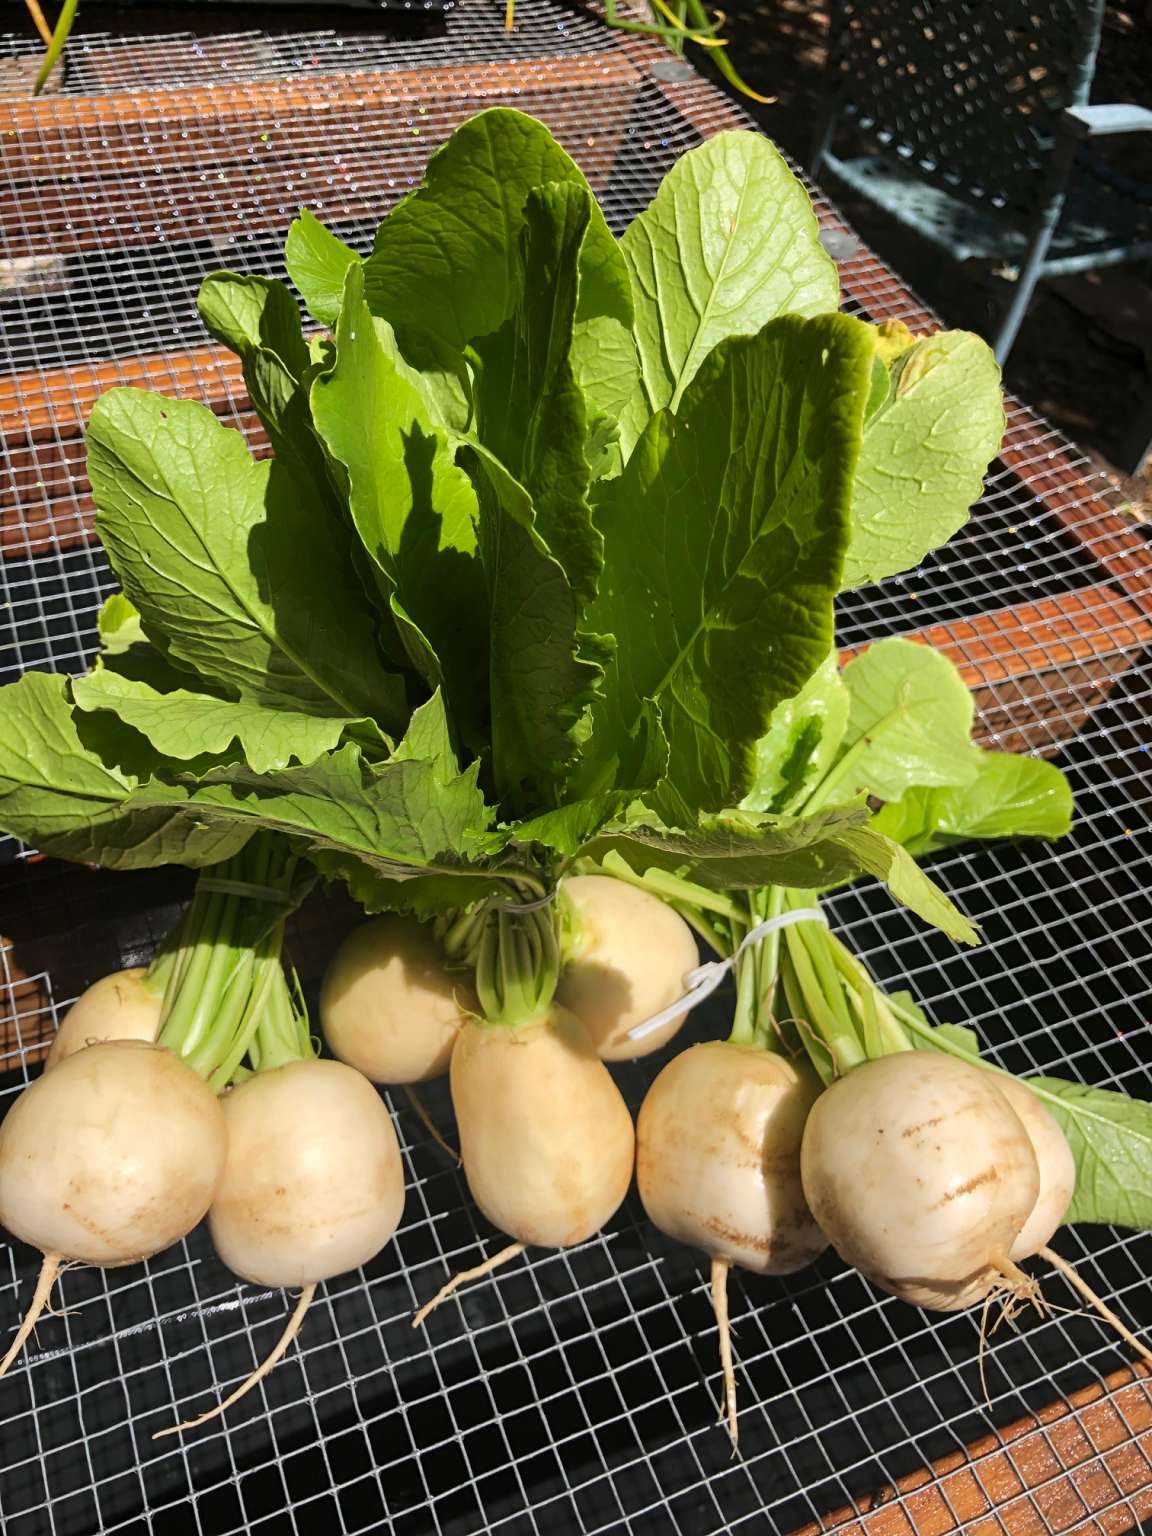 Hakurei Turnips (Bunched) – Castle Rock Farm – Organic Produce